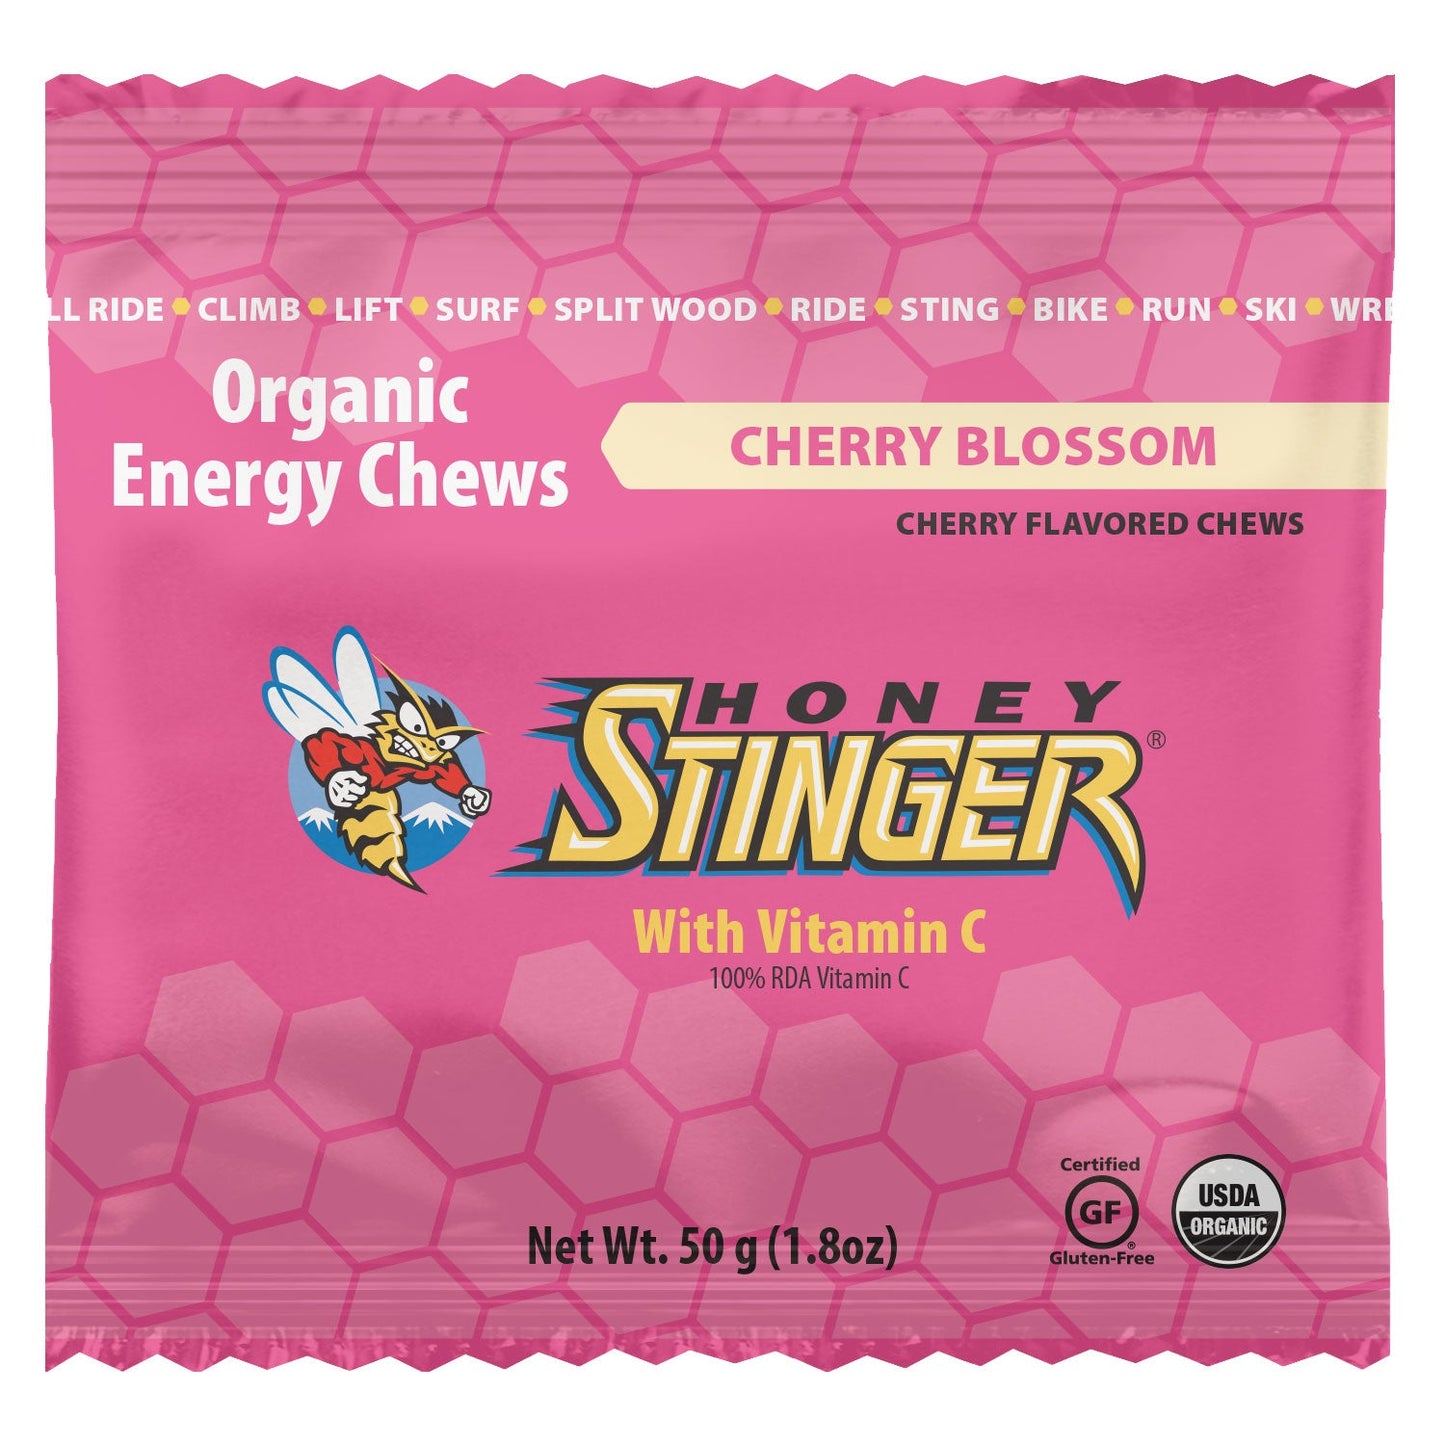 Energy Chews - Cherry Blossom